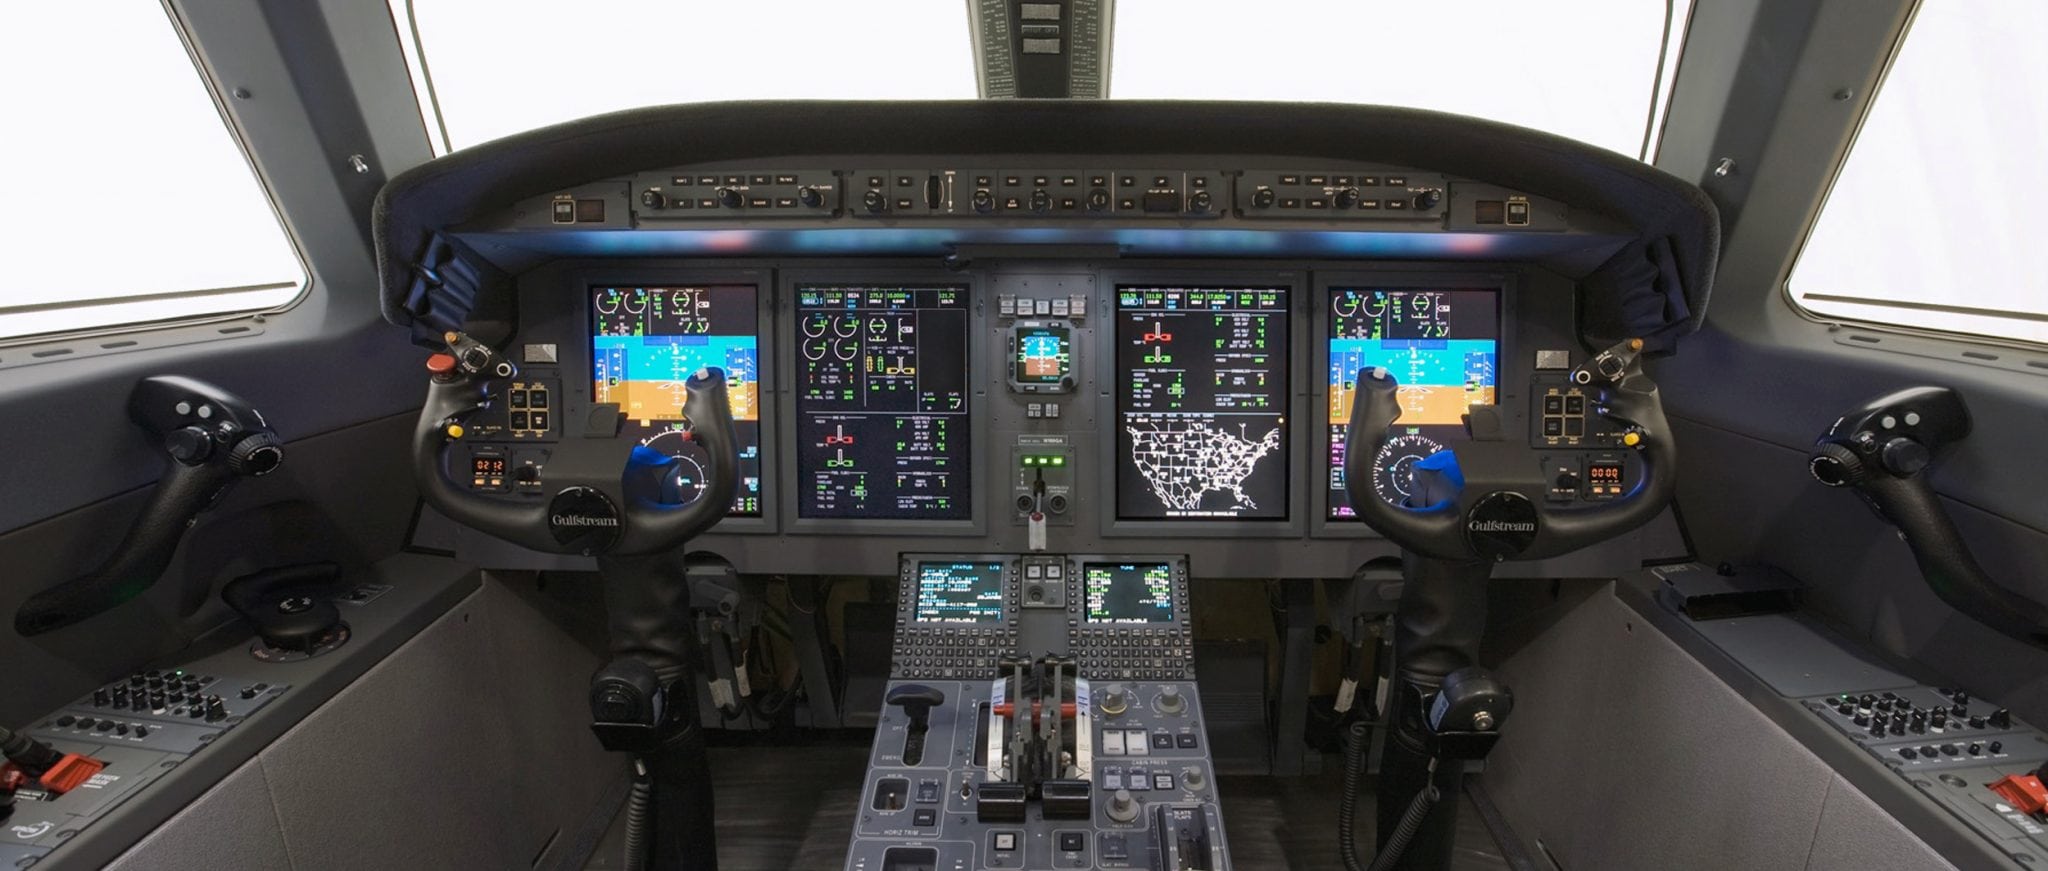 Gulfstream G150 cockpit avionics